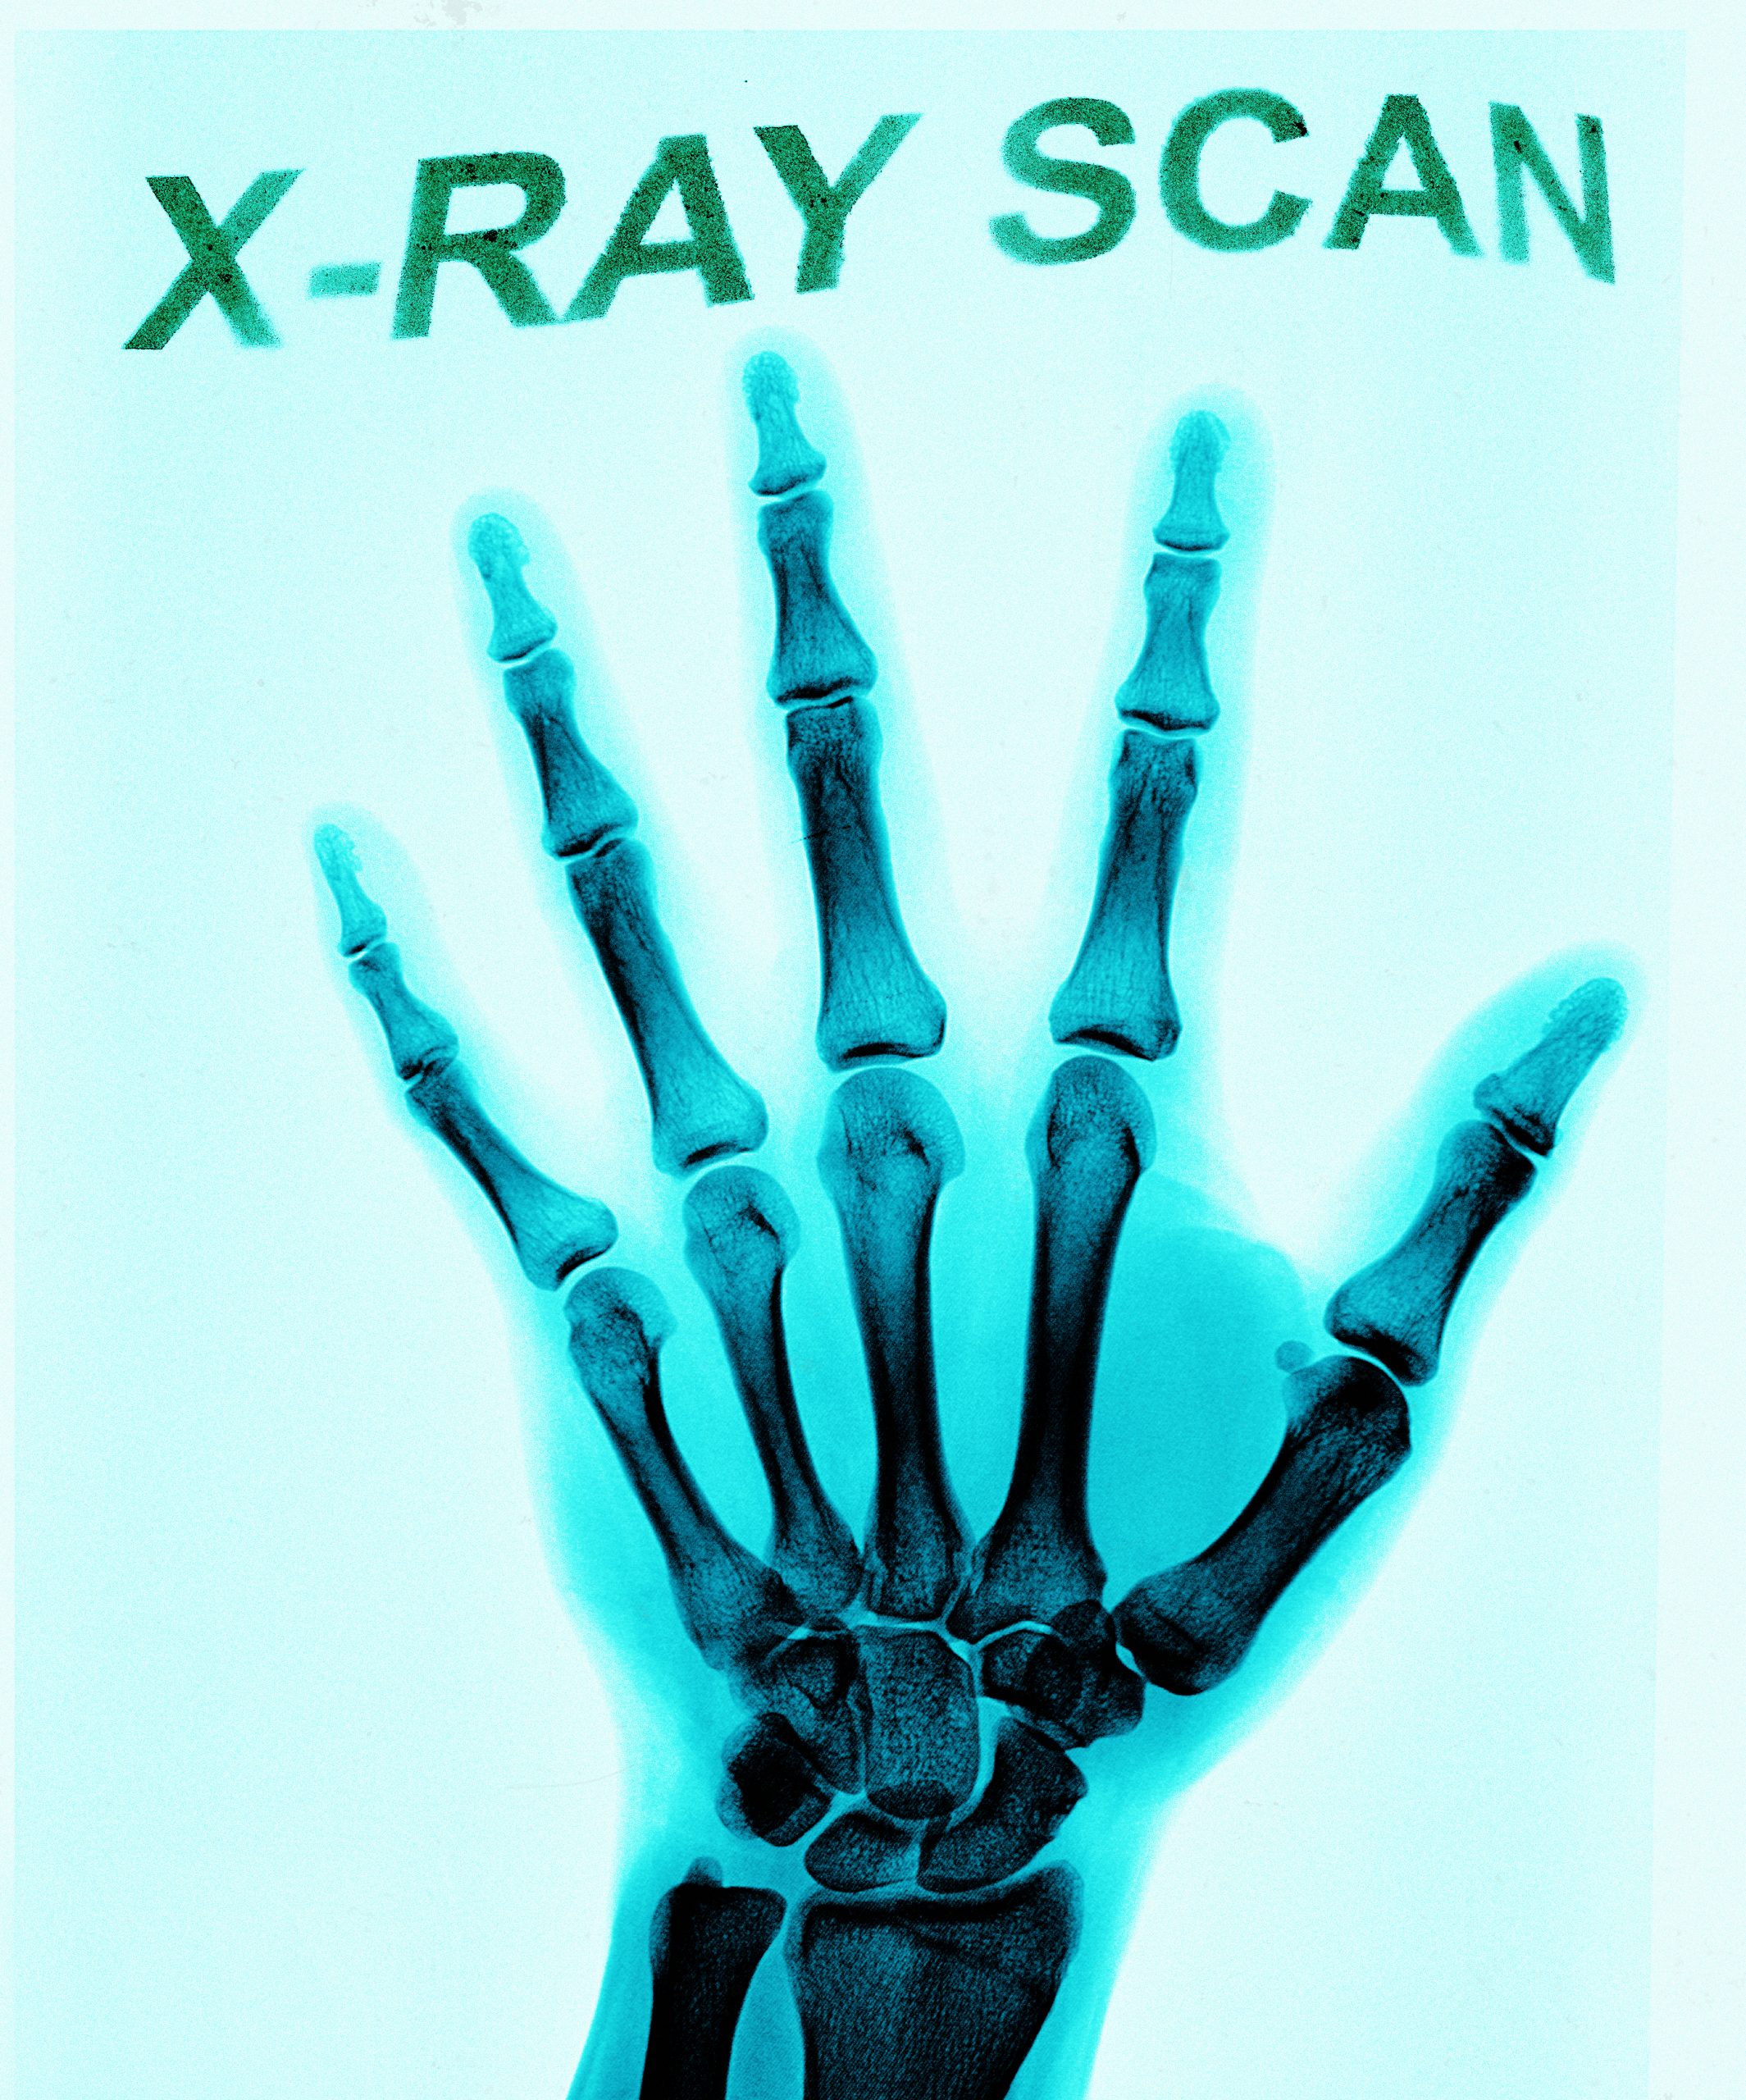 X-ray scan photoshop action Undyed creative studio